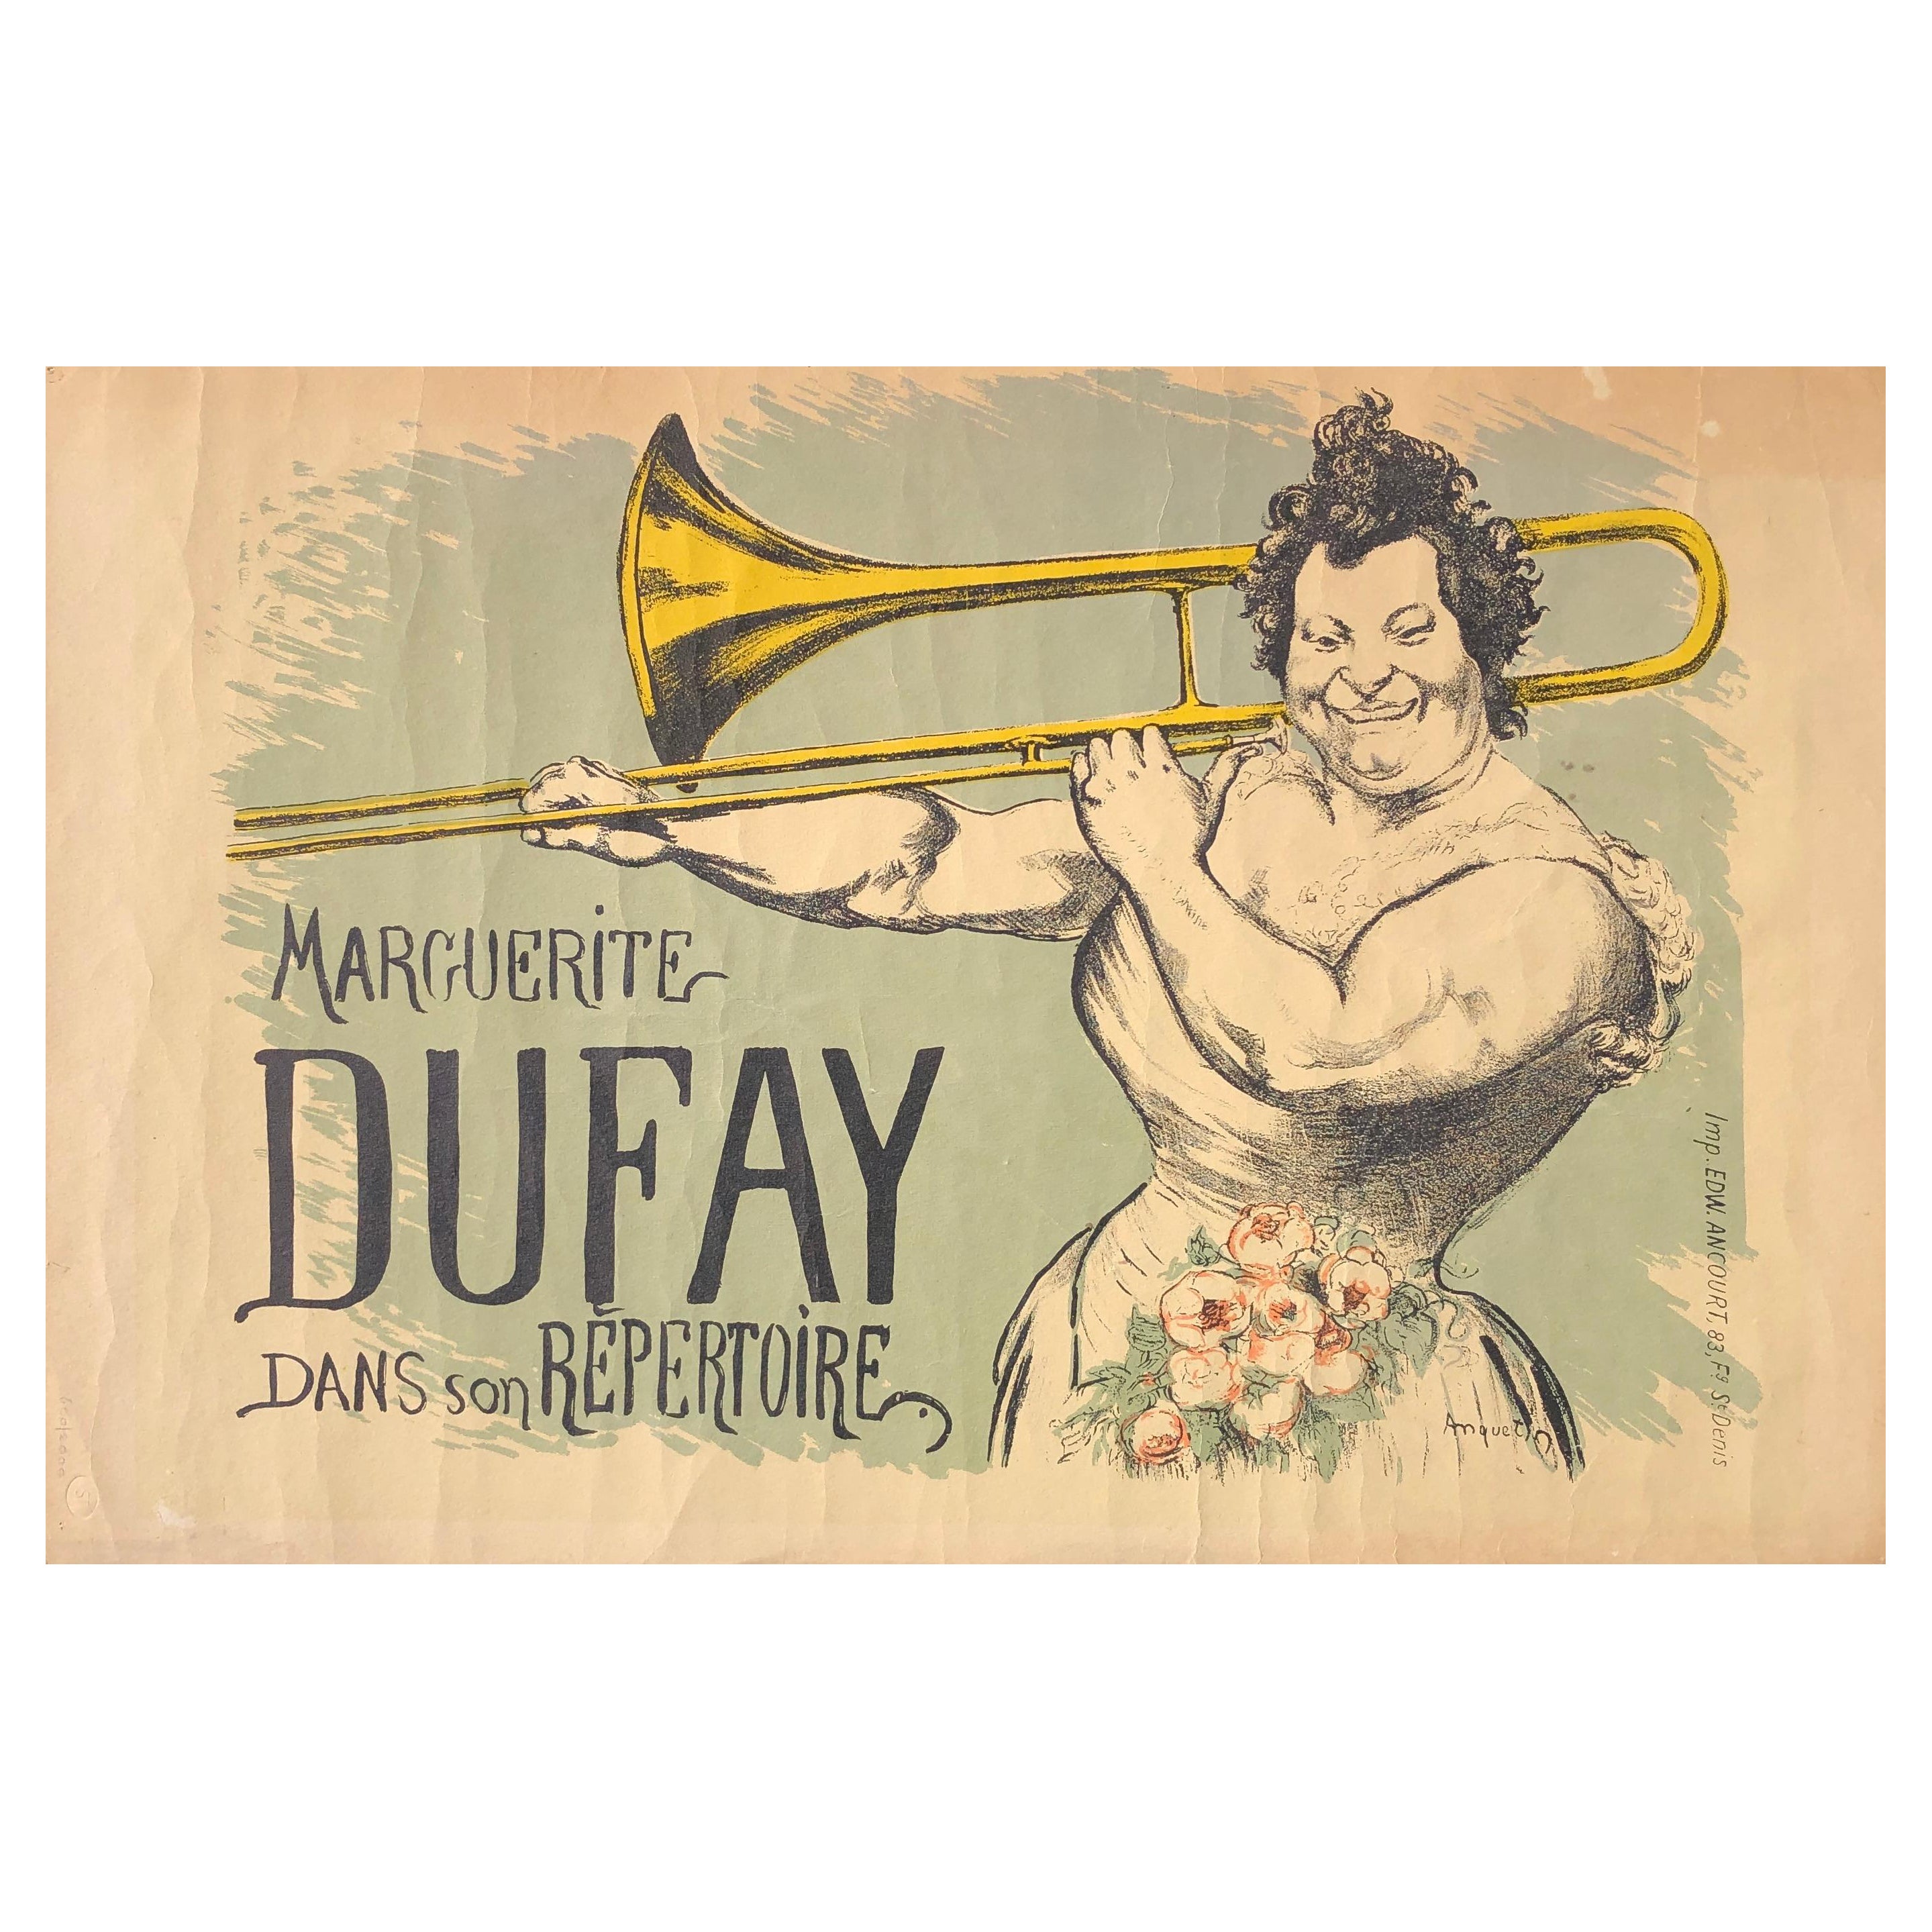 Marguerite Dufay - Vintage lithographic Art Nouveau poster by Louis Anquetin